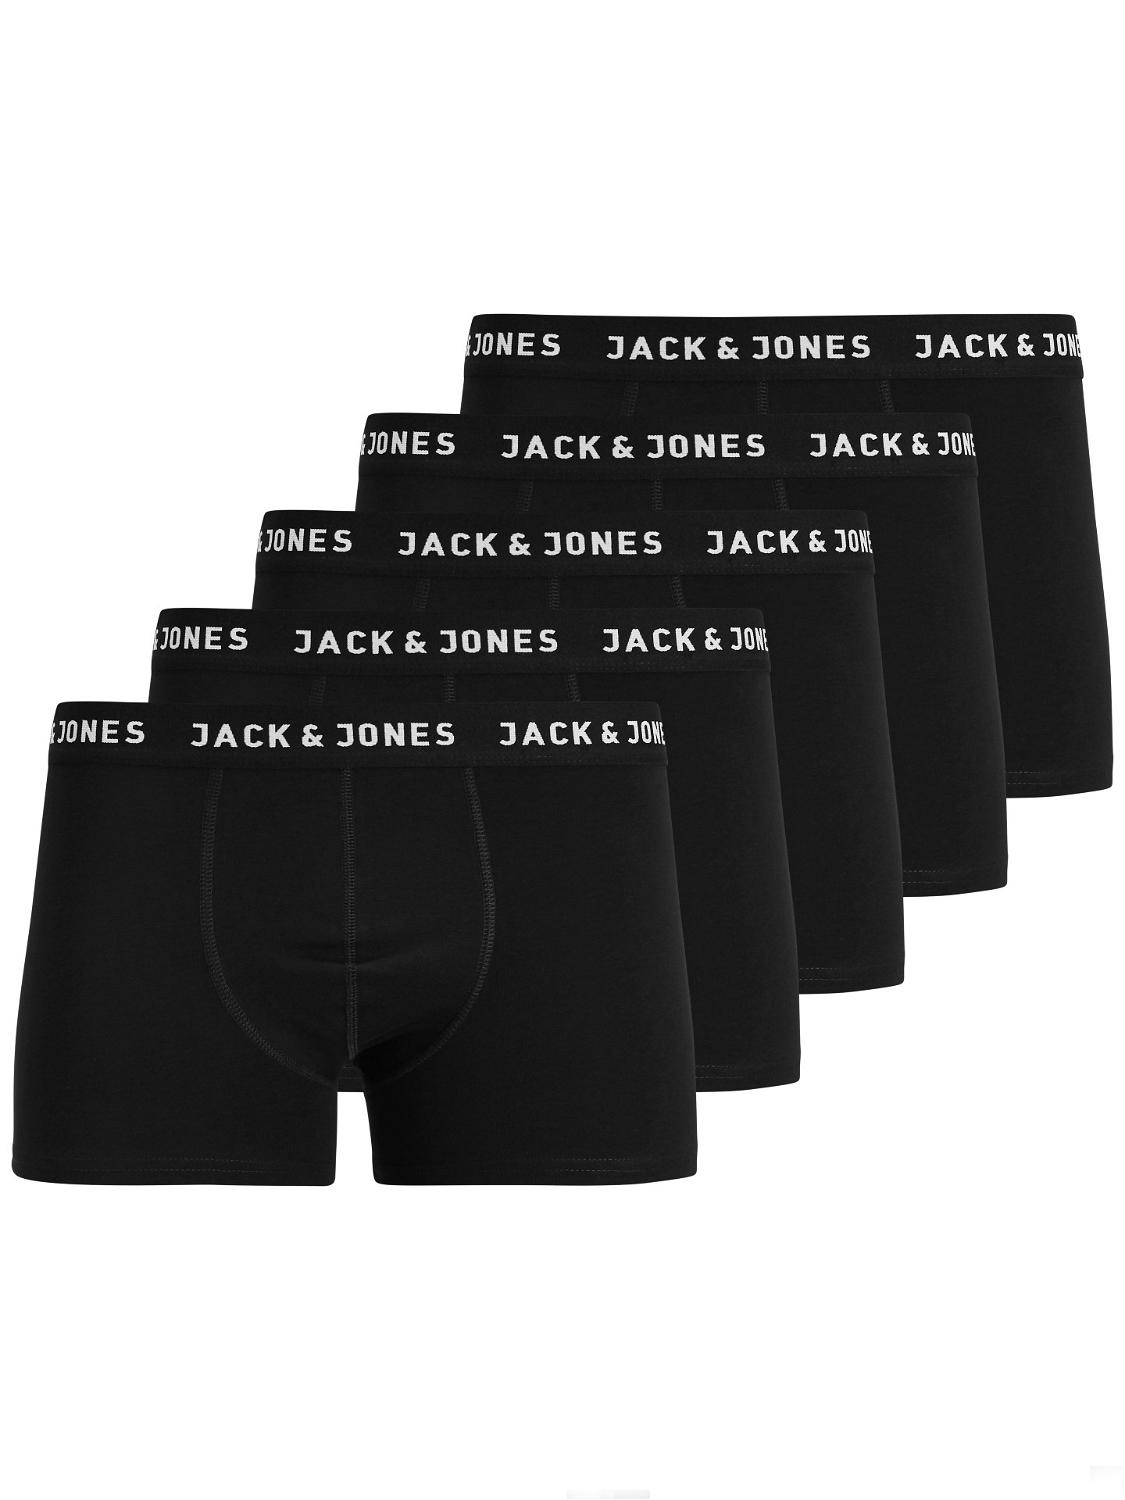 JACK & JONES Muške bokserice 12142342, 5 komada, Crne